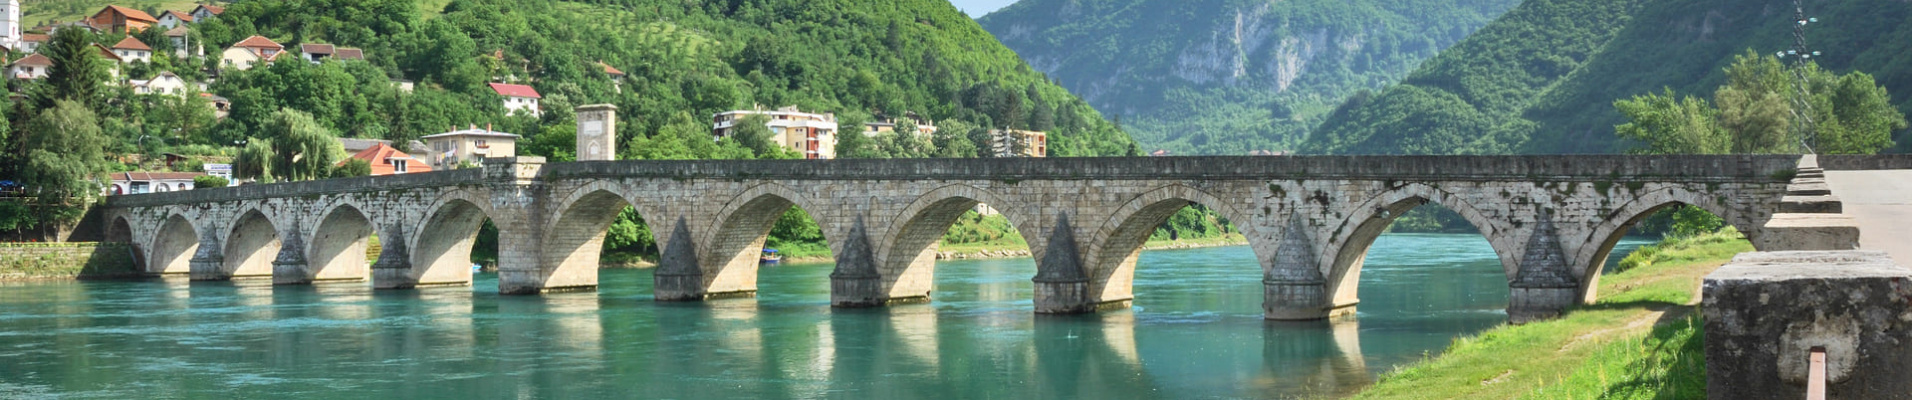 pont-riviere-drina-serbie